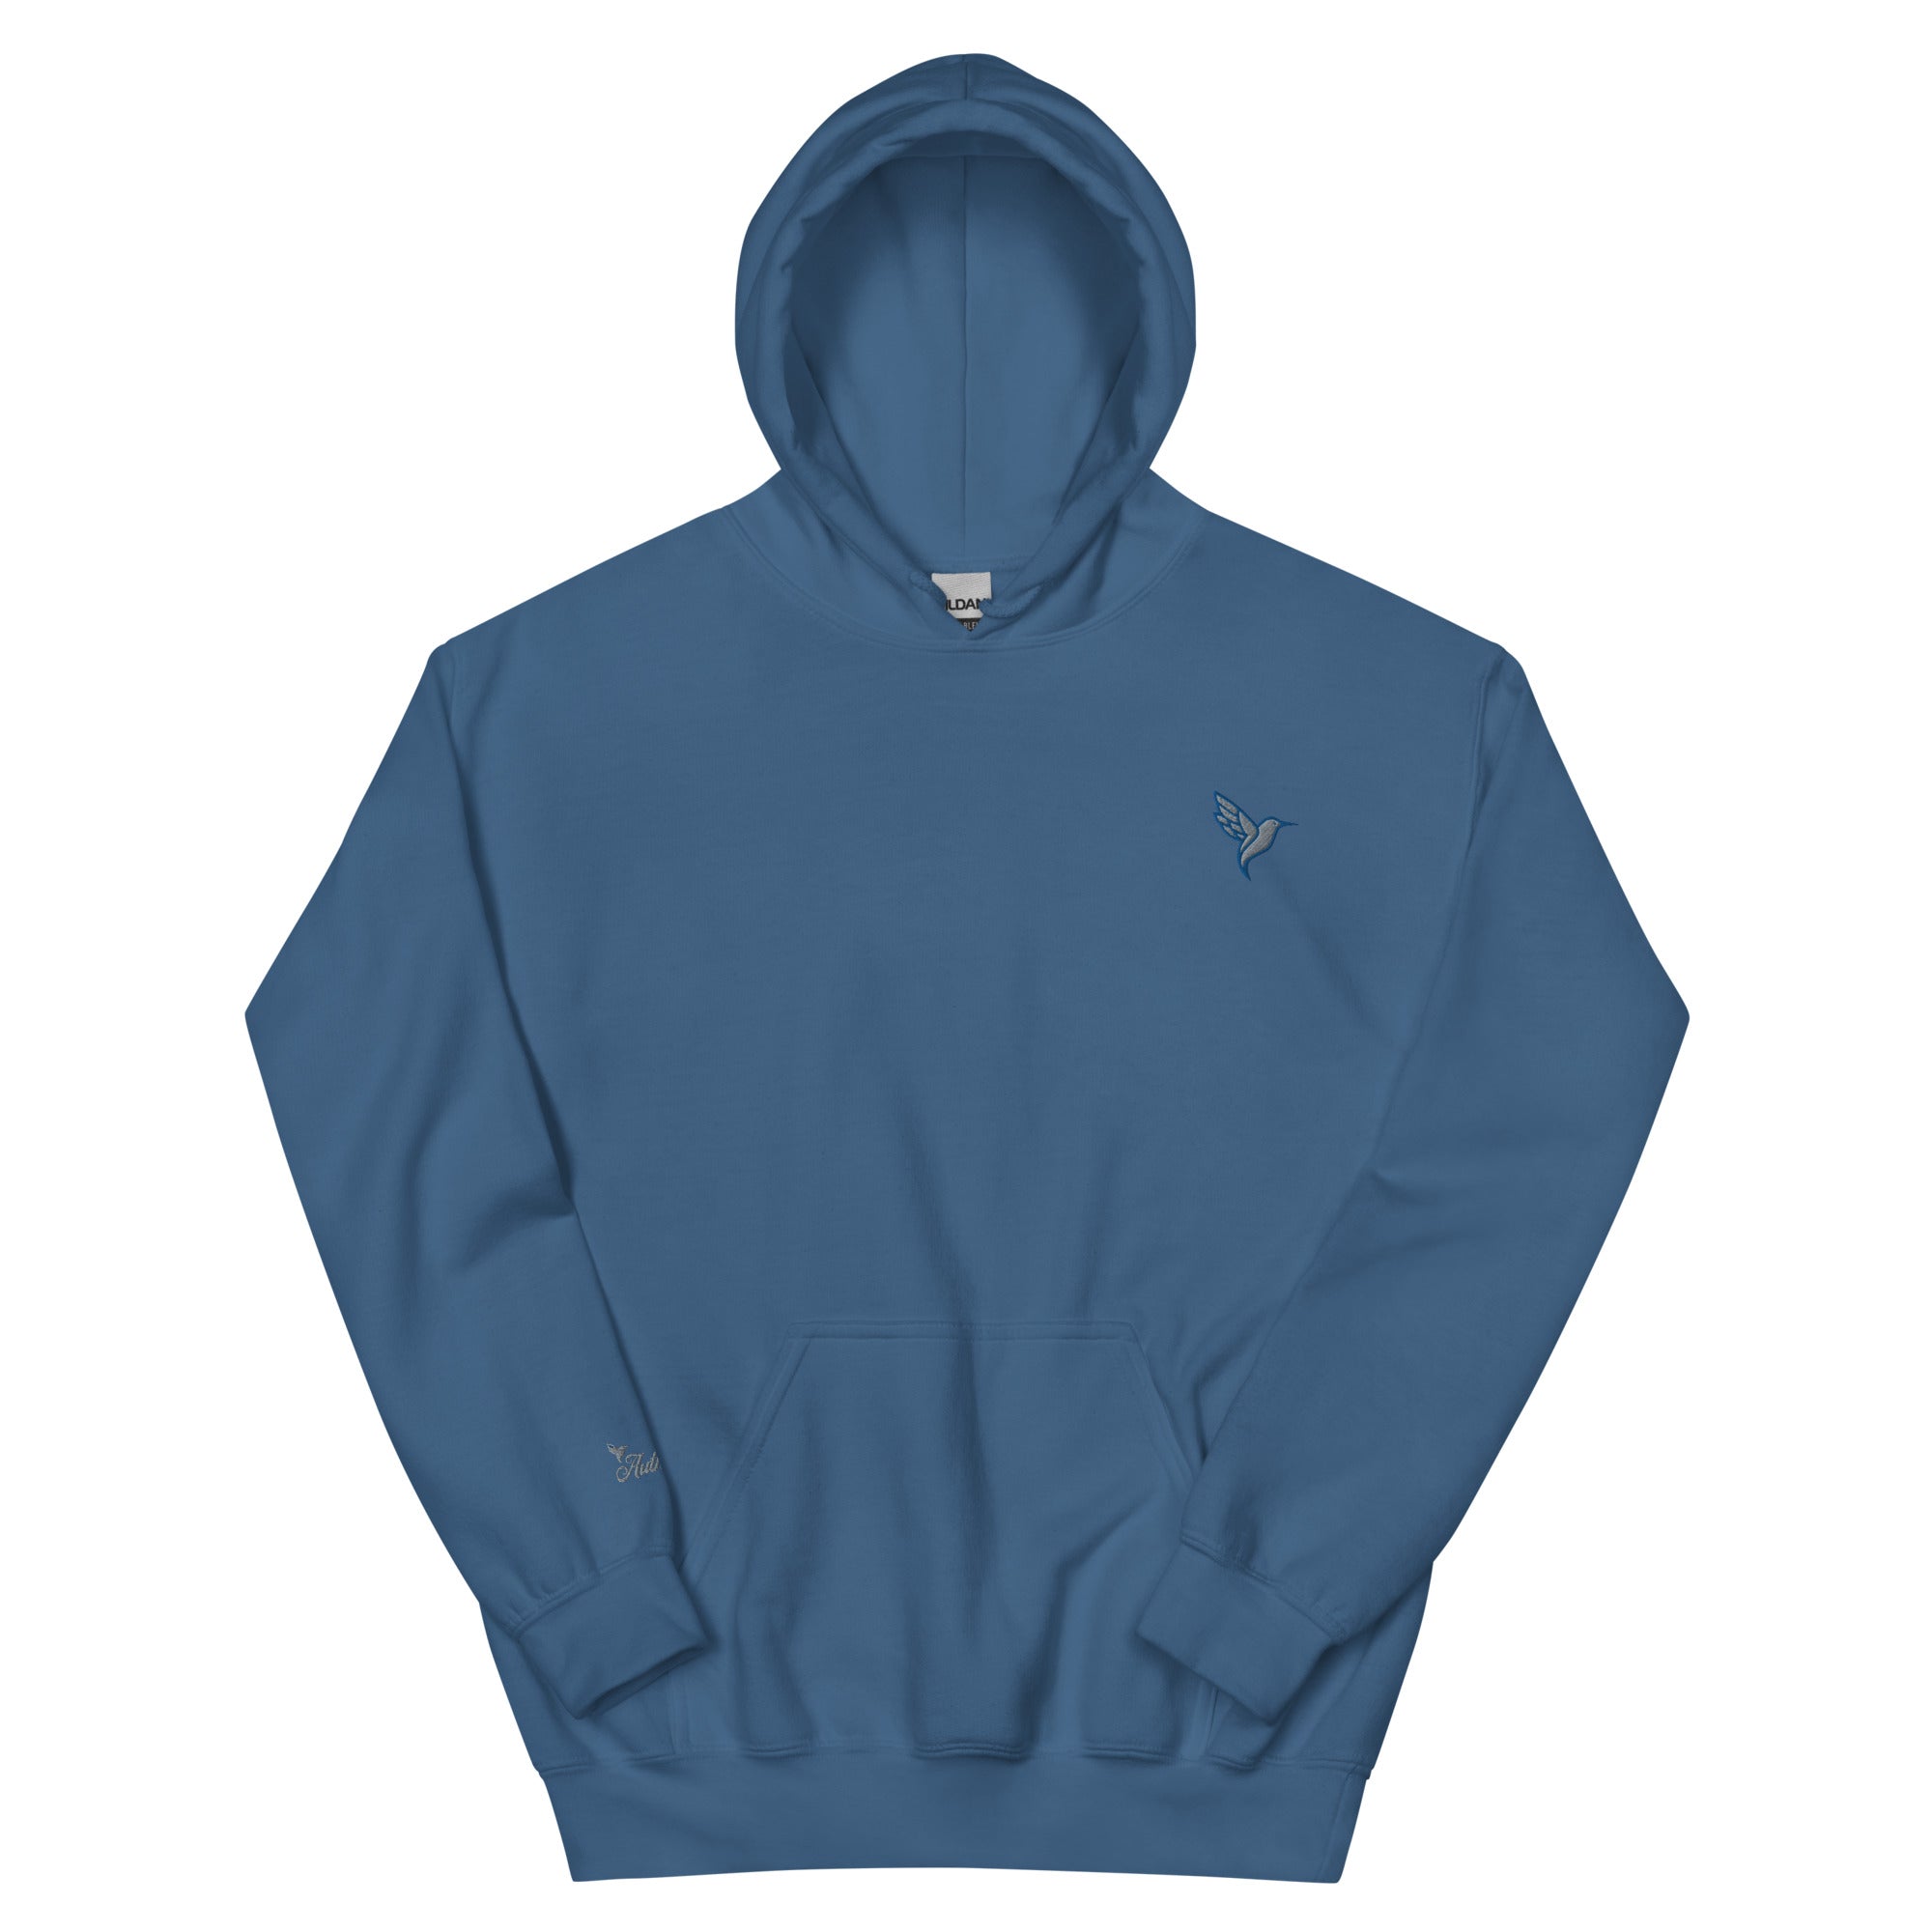 unisex-heavy-blend-hoodie-indigo-blue-front-65e8c47a334c3.jpg